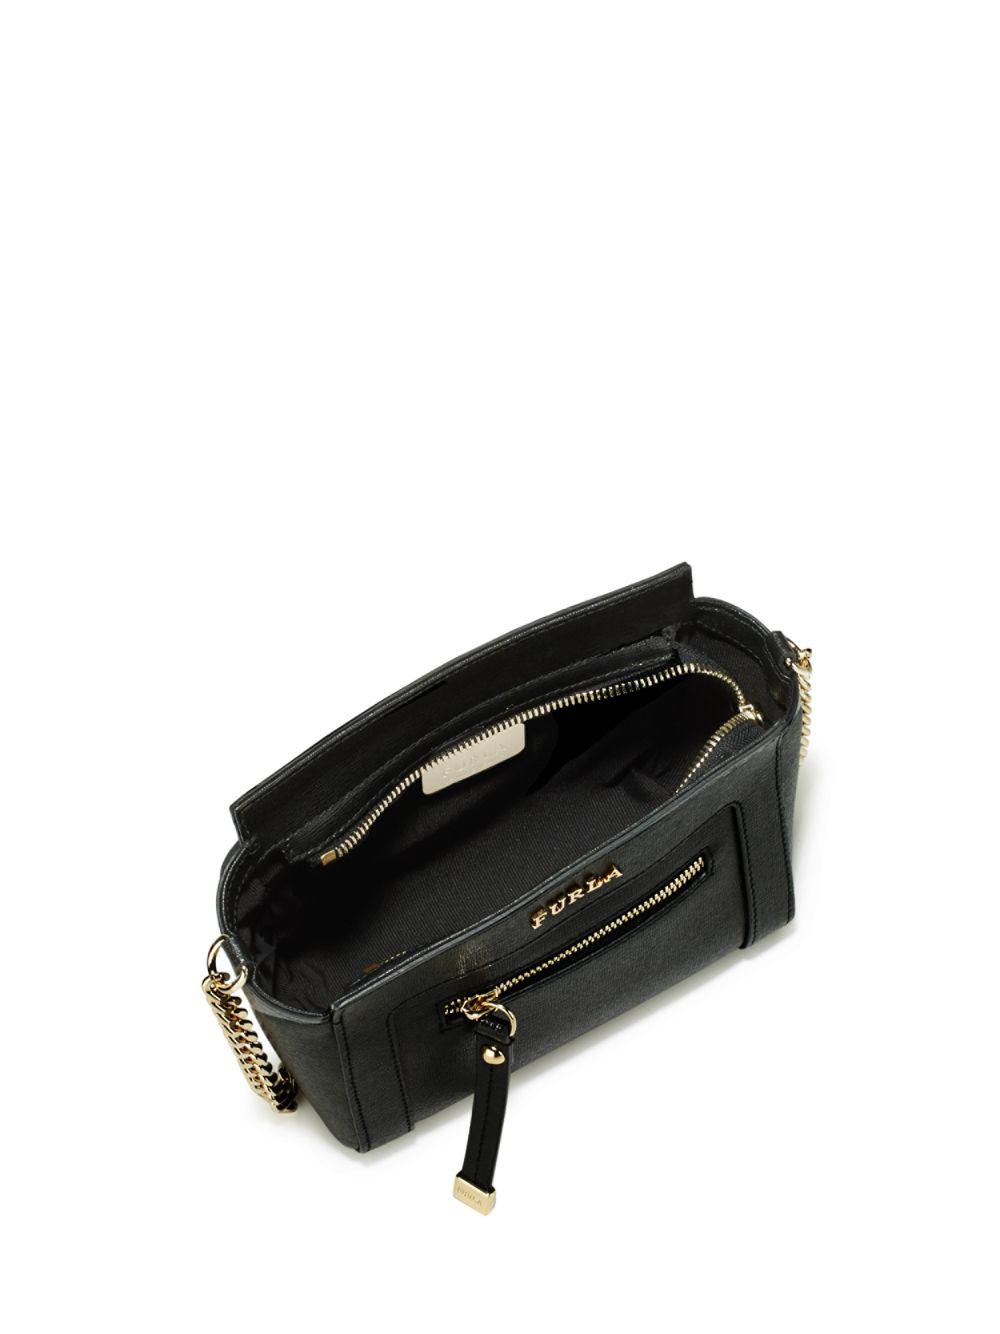 Furla Ginevra Leather Mini Crossbody Bag in Black | Lyst